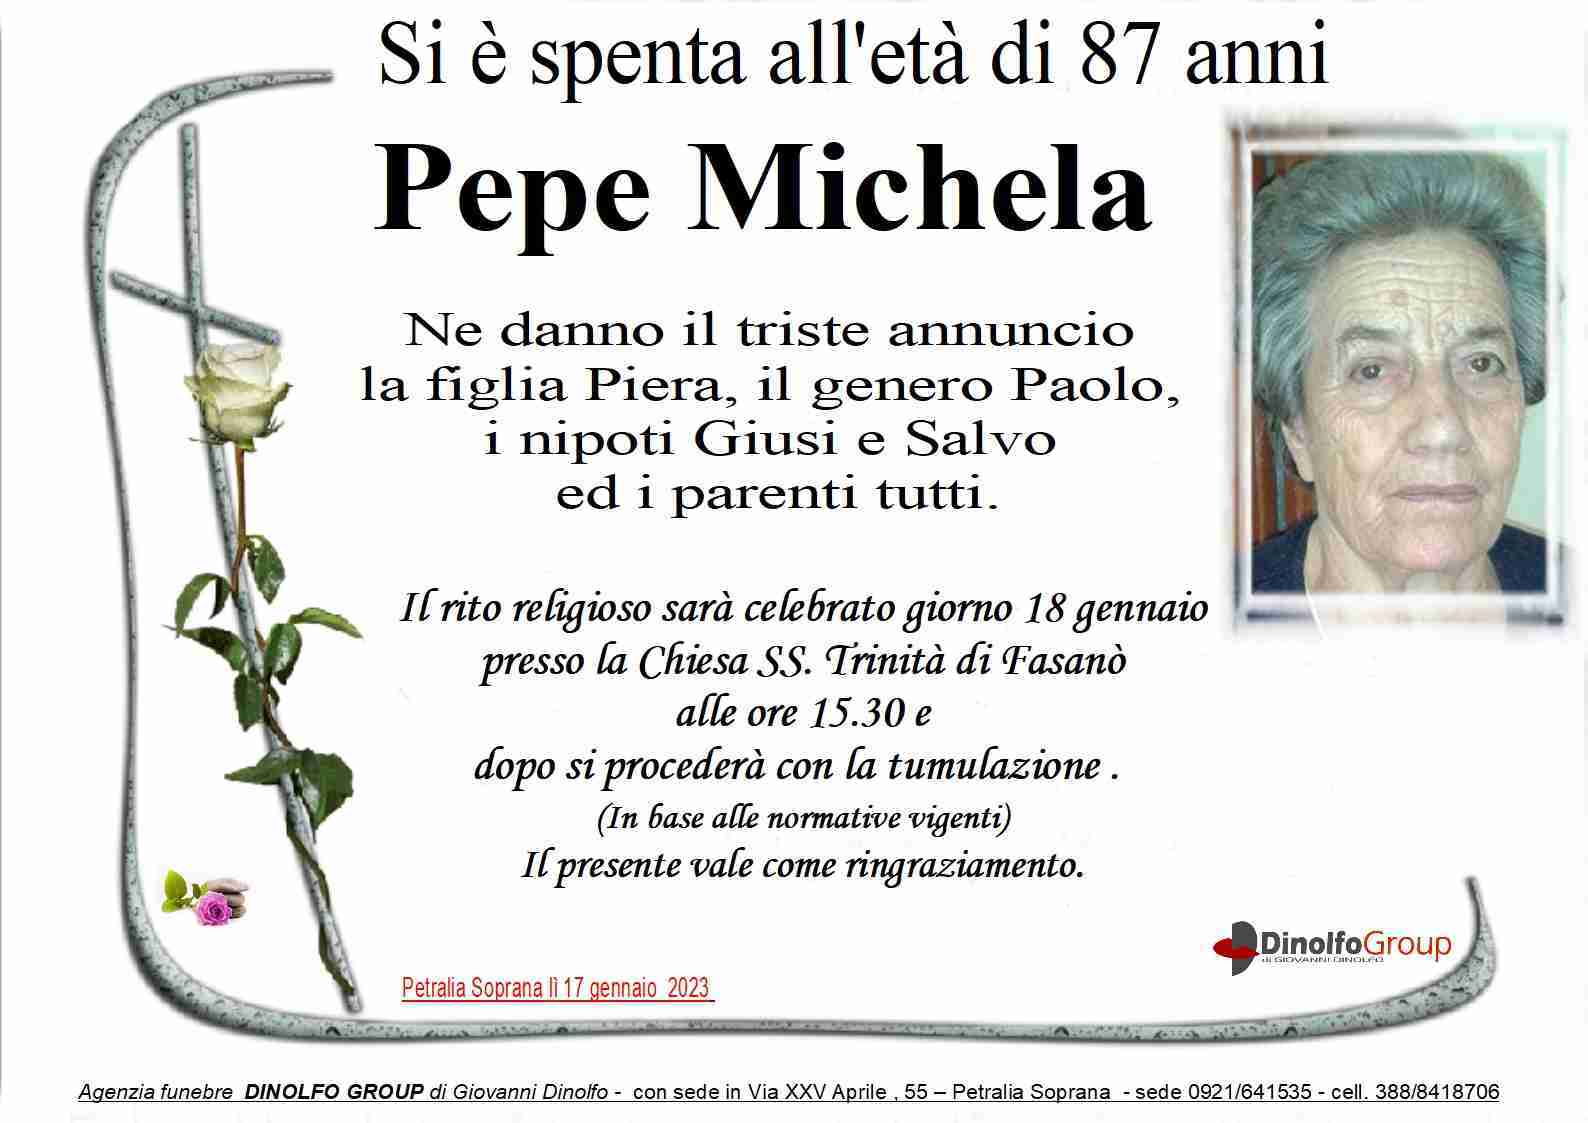 Michela Pepe